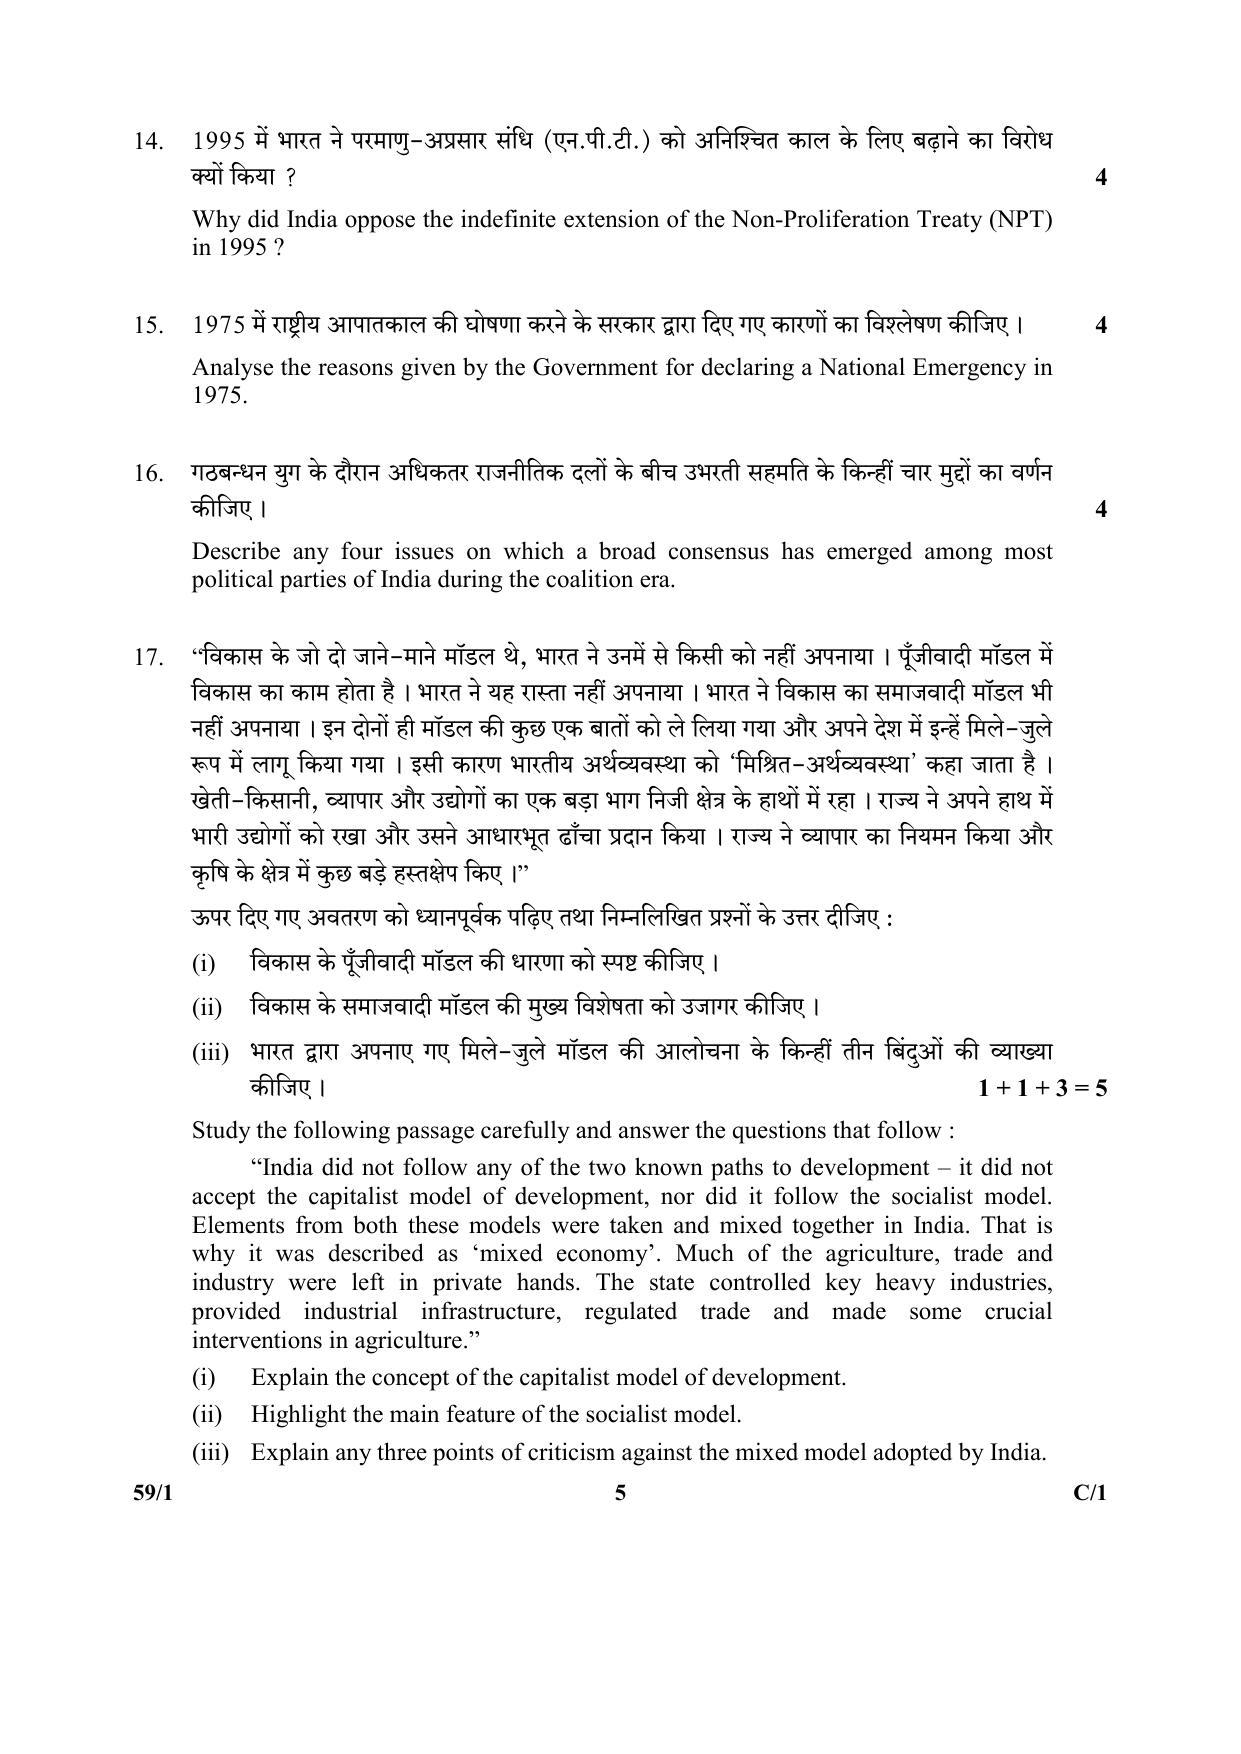 CBSE Class 12 221-1 Political Science_Punjabi 2018 Compartment Question Paper - Page 13